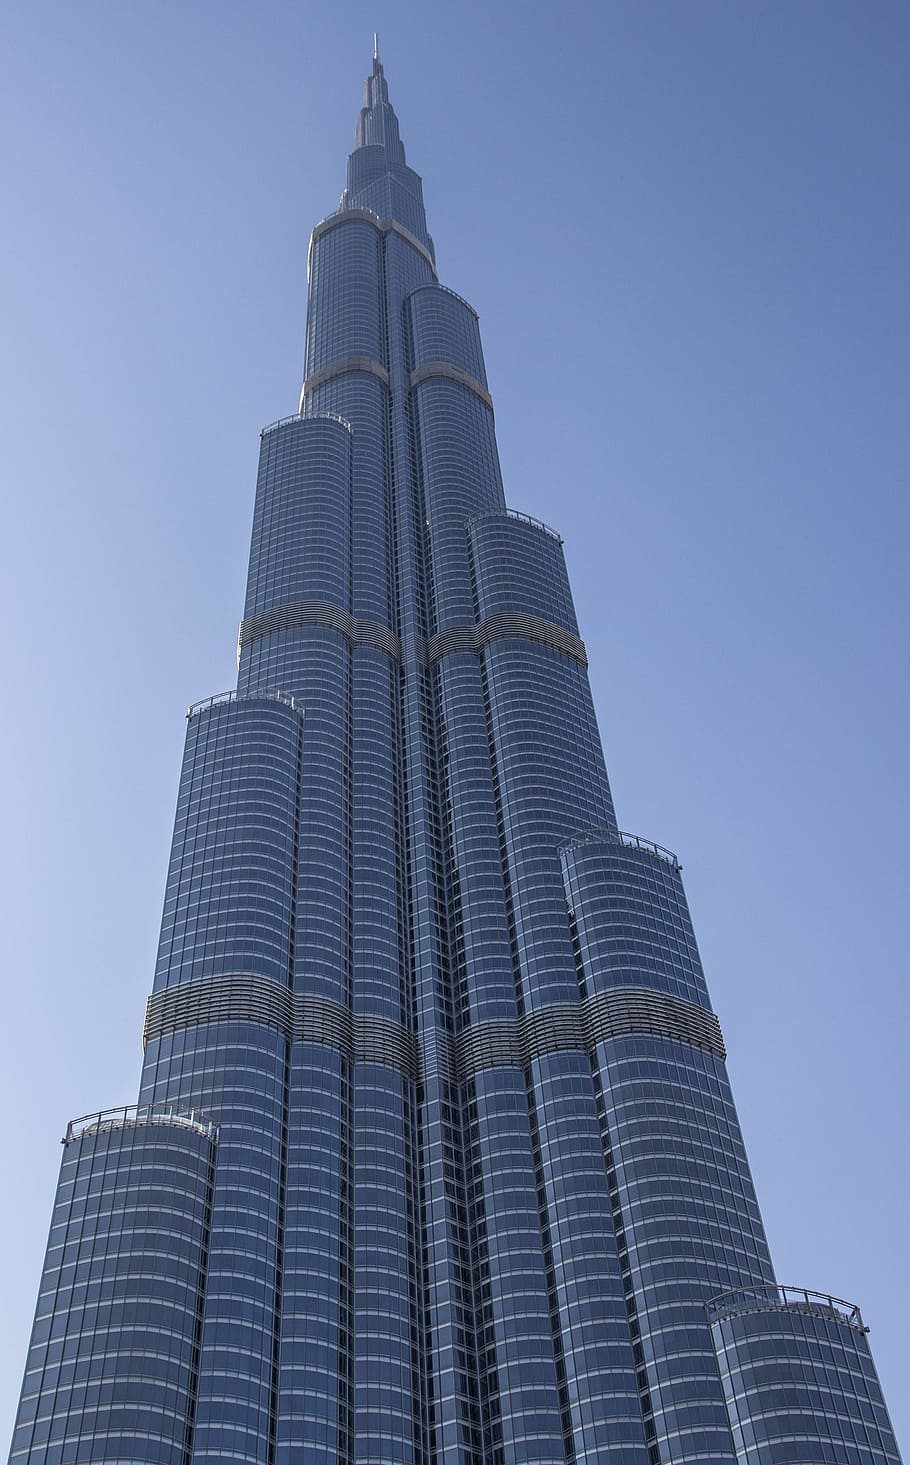 low, angle view, curtain wall building, daytime, burj khalifa, the world's tallest building, dubai, skyscraper, u a e, city